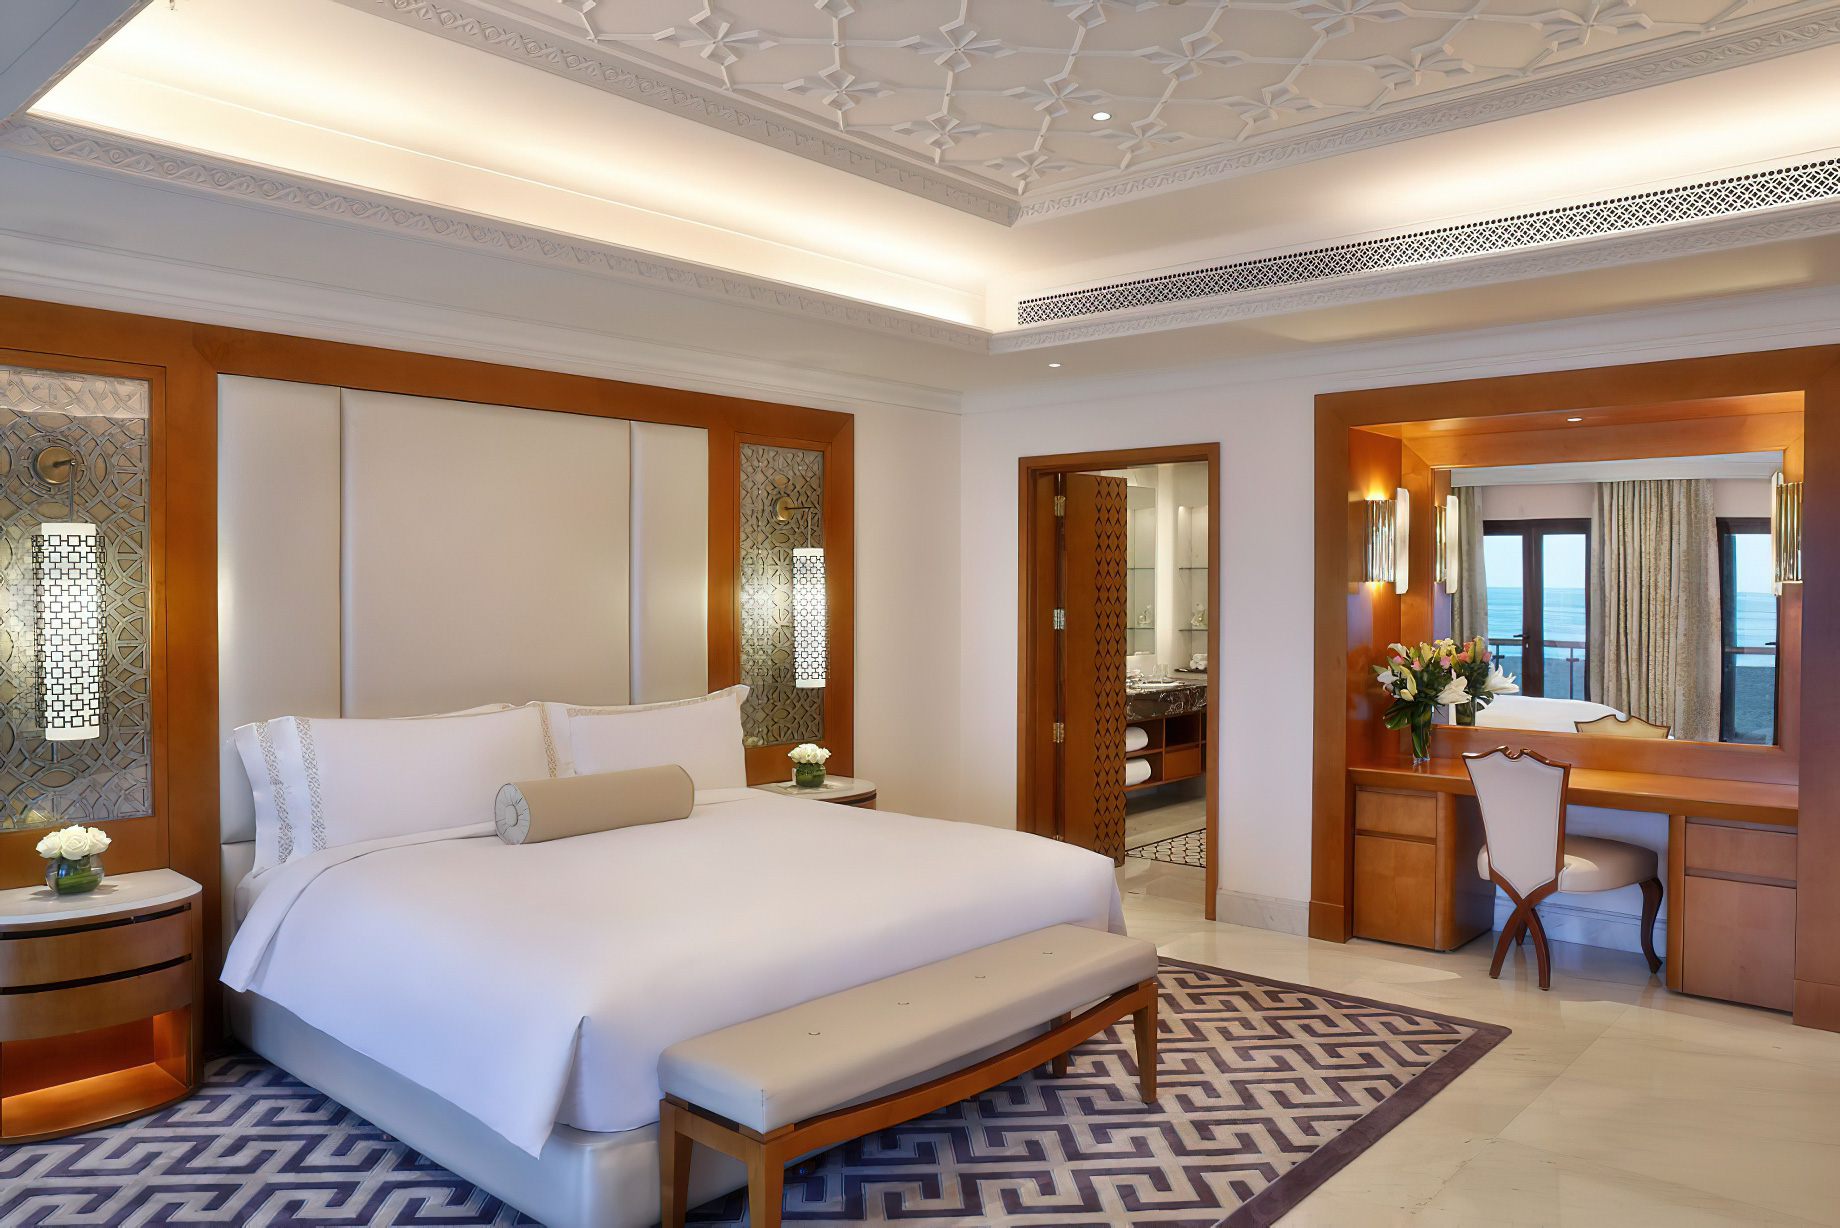 Al Bustan Palace, A Ritz-Carlton Hotel - Muscat, Oman - Presidential Sea View Suite Bedroom